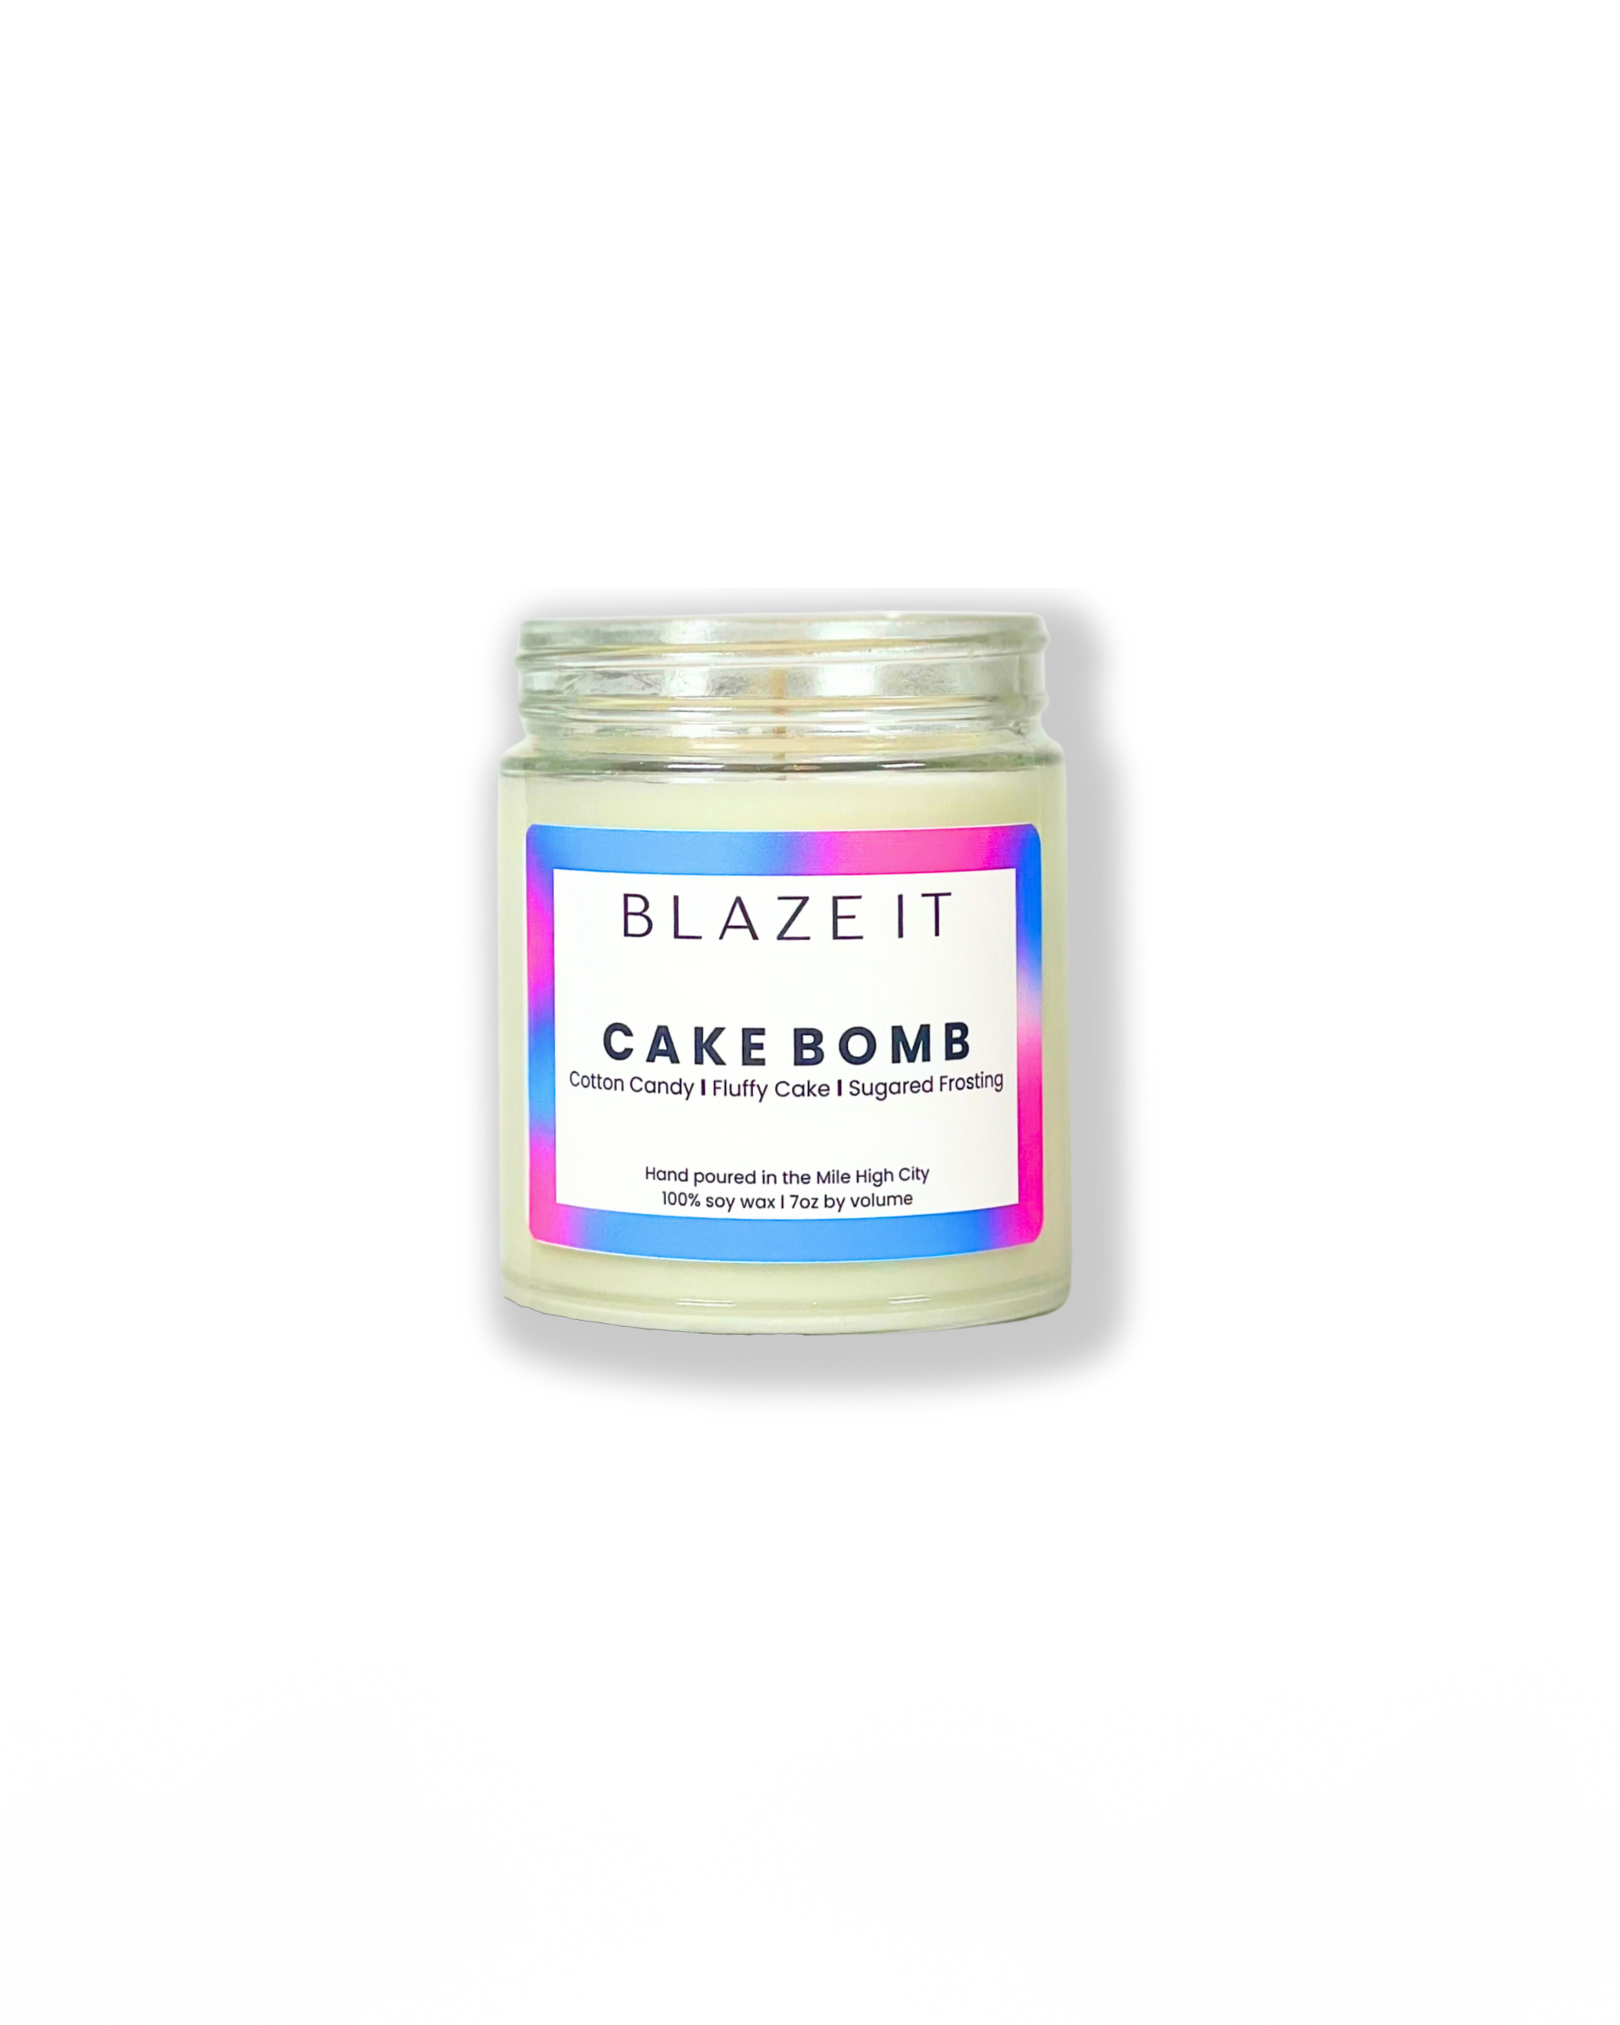 Cake Bomb candle - Blaze It Candle co